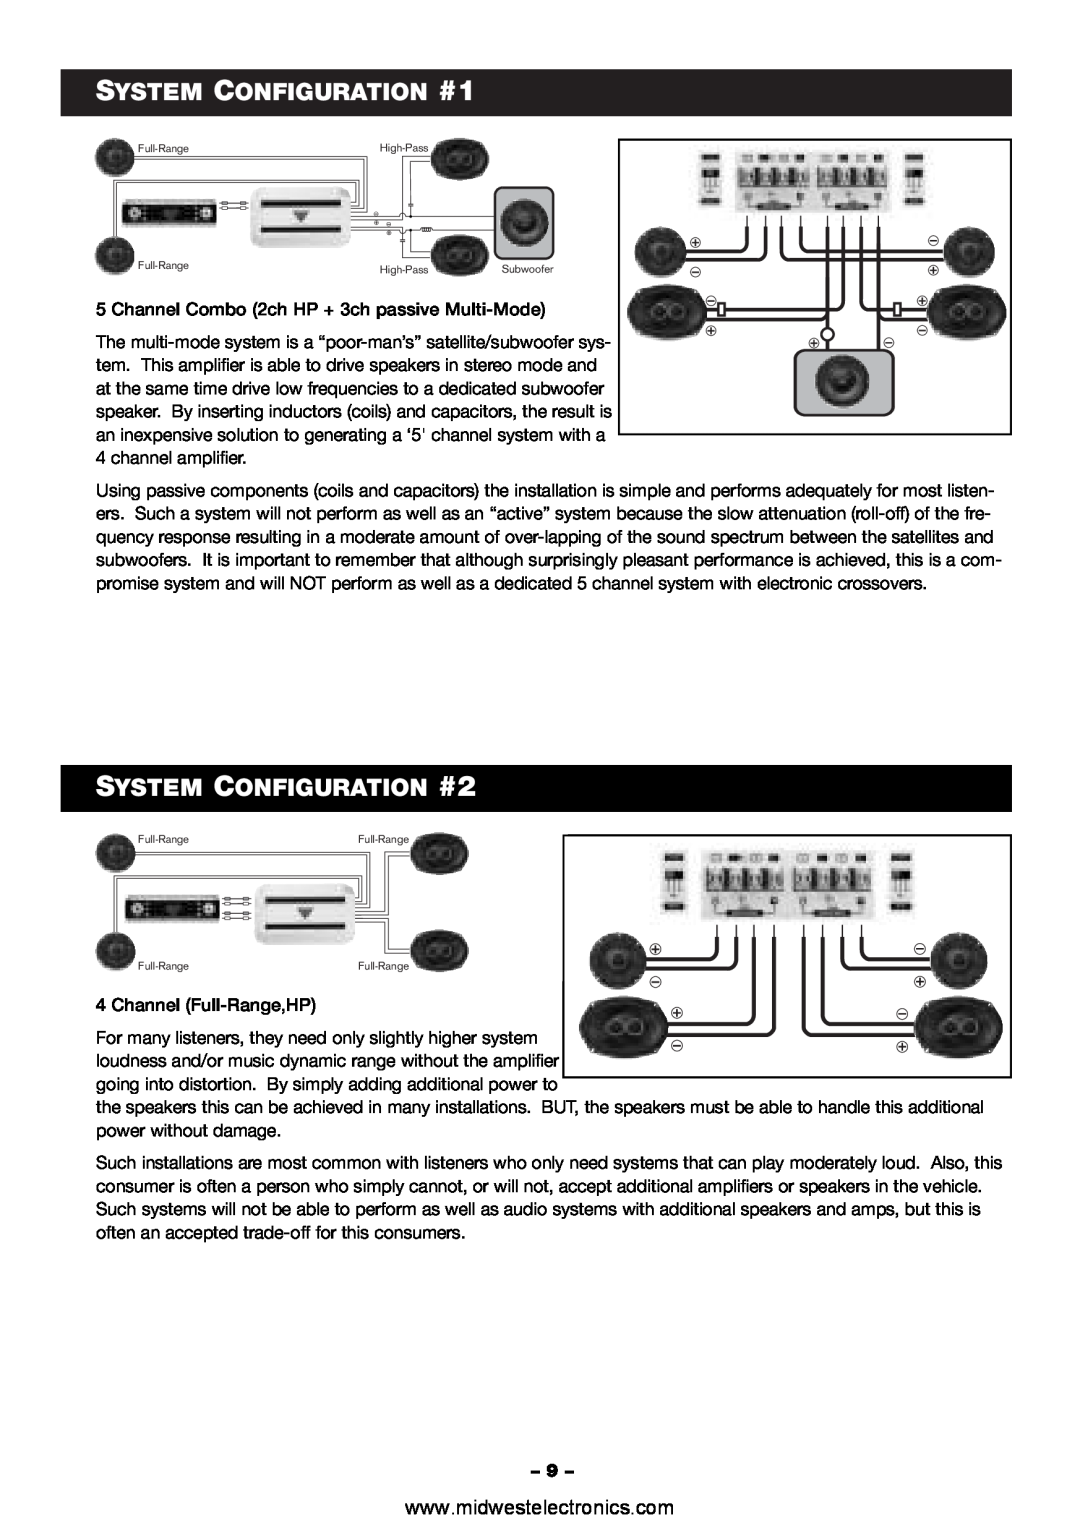 Blaupunkt VA4100 manual SYSTEM CONFIGURATION #1, SYSTEM CONFIGURATION #2 